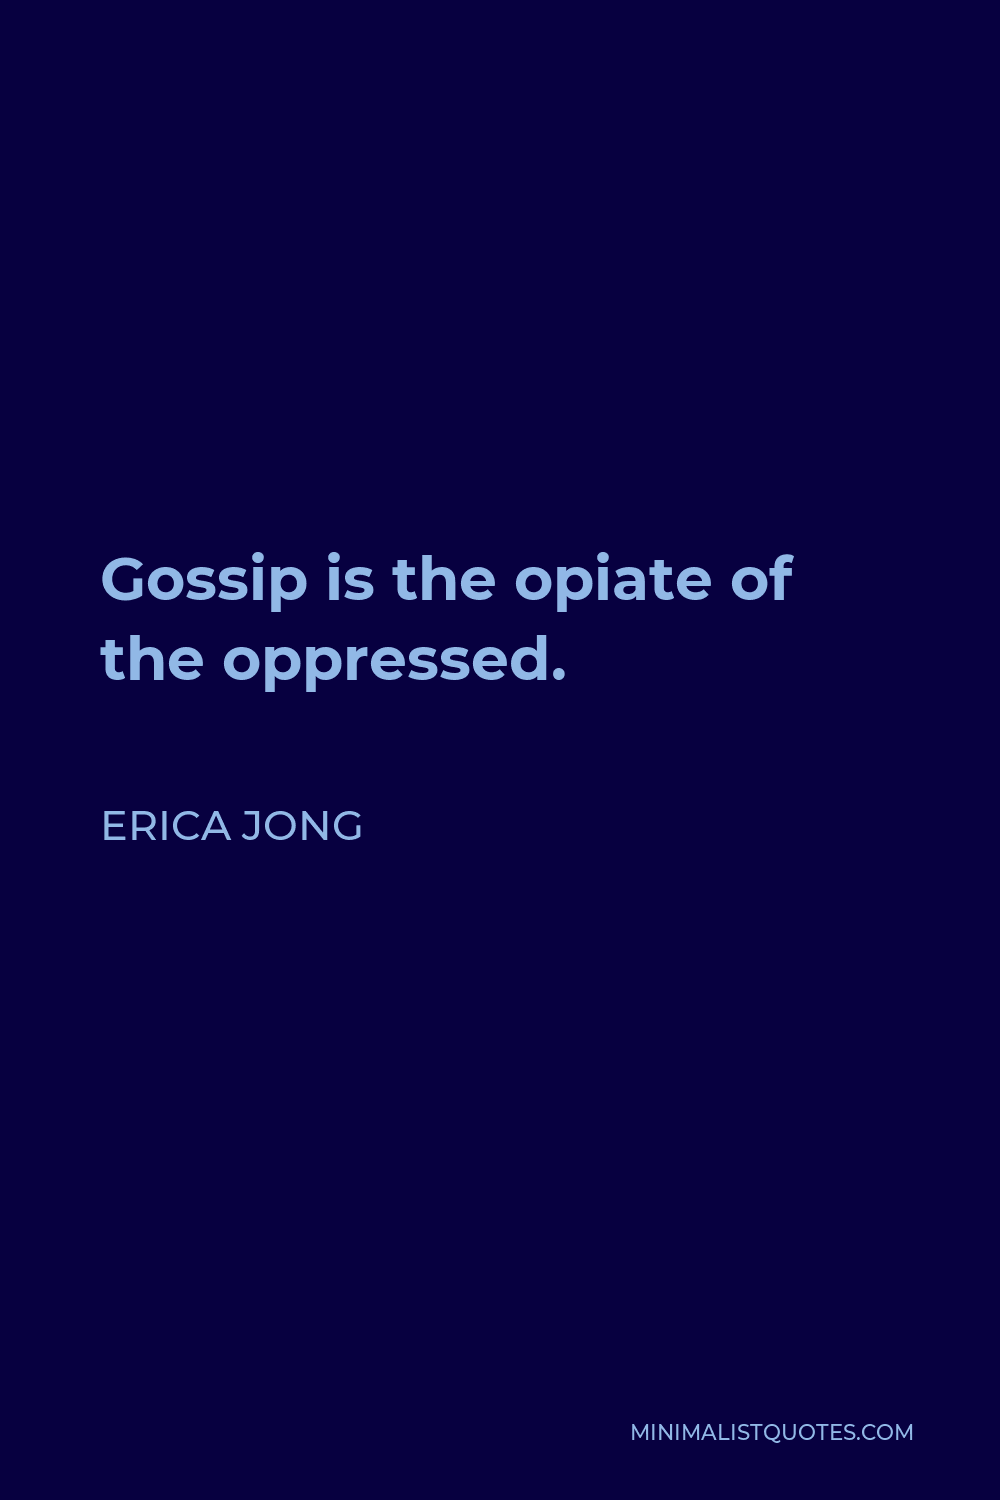 Erica Jong Quote - Gossip is the opiate of the oppressed.